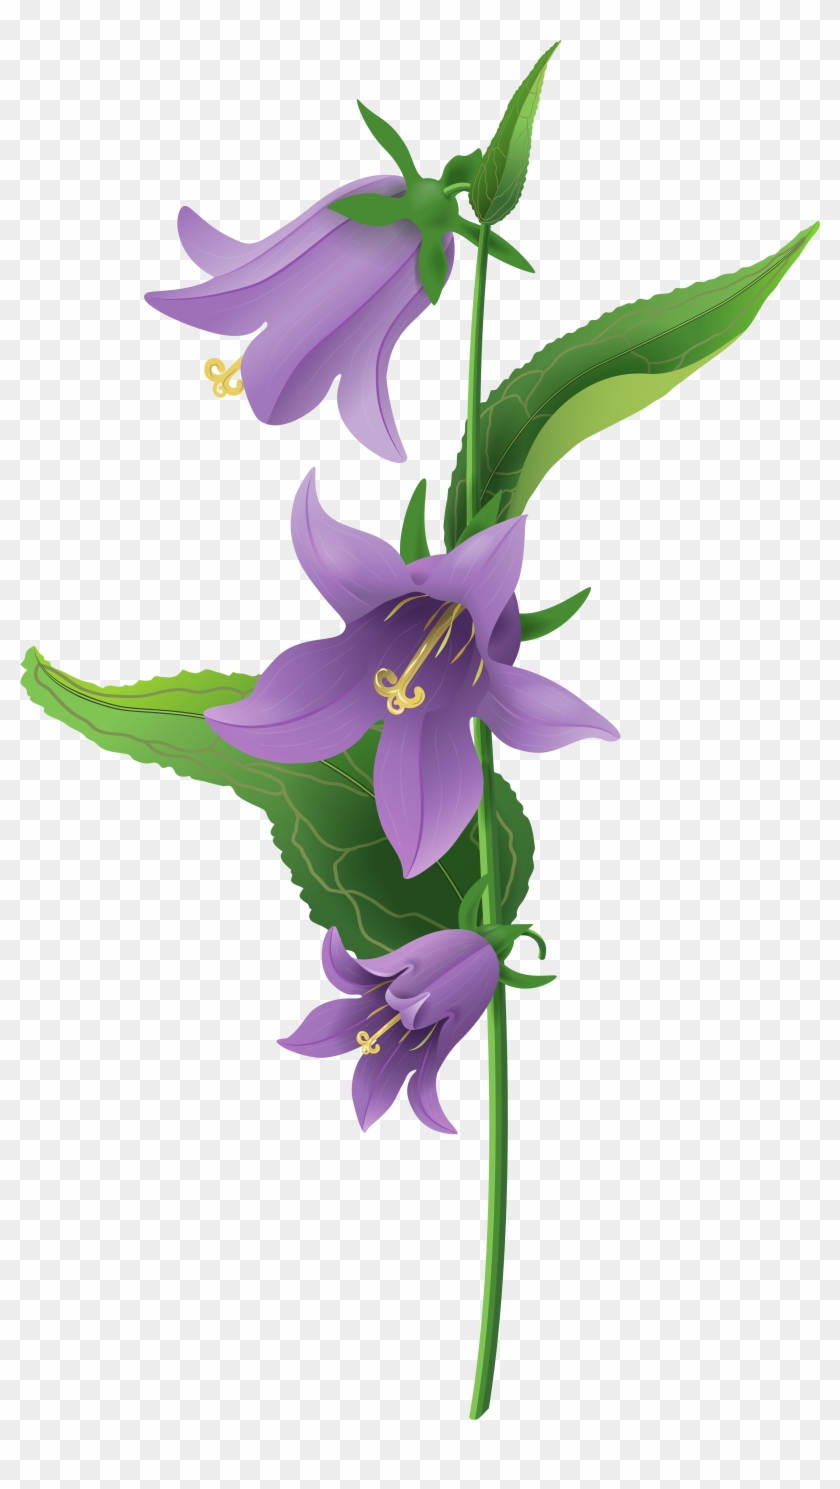 Wild Purple Bell Flower Png Clip Art Image - Bell Flower Clipart Png #226624